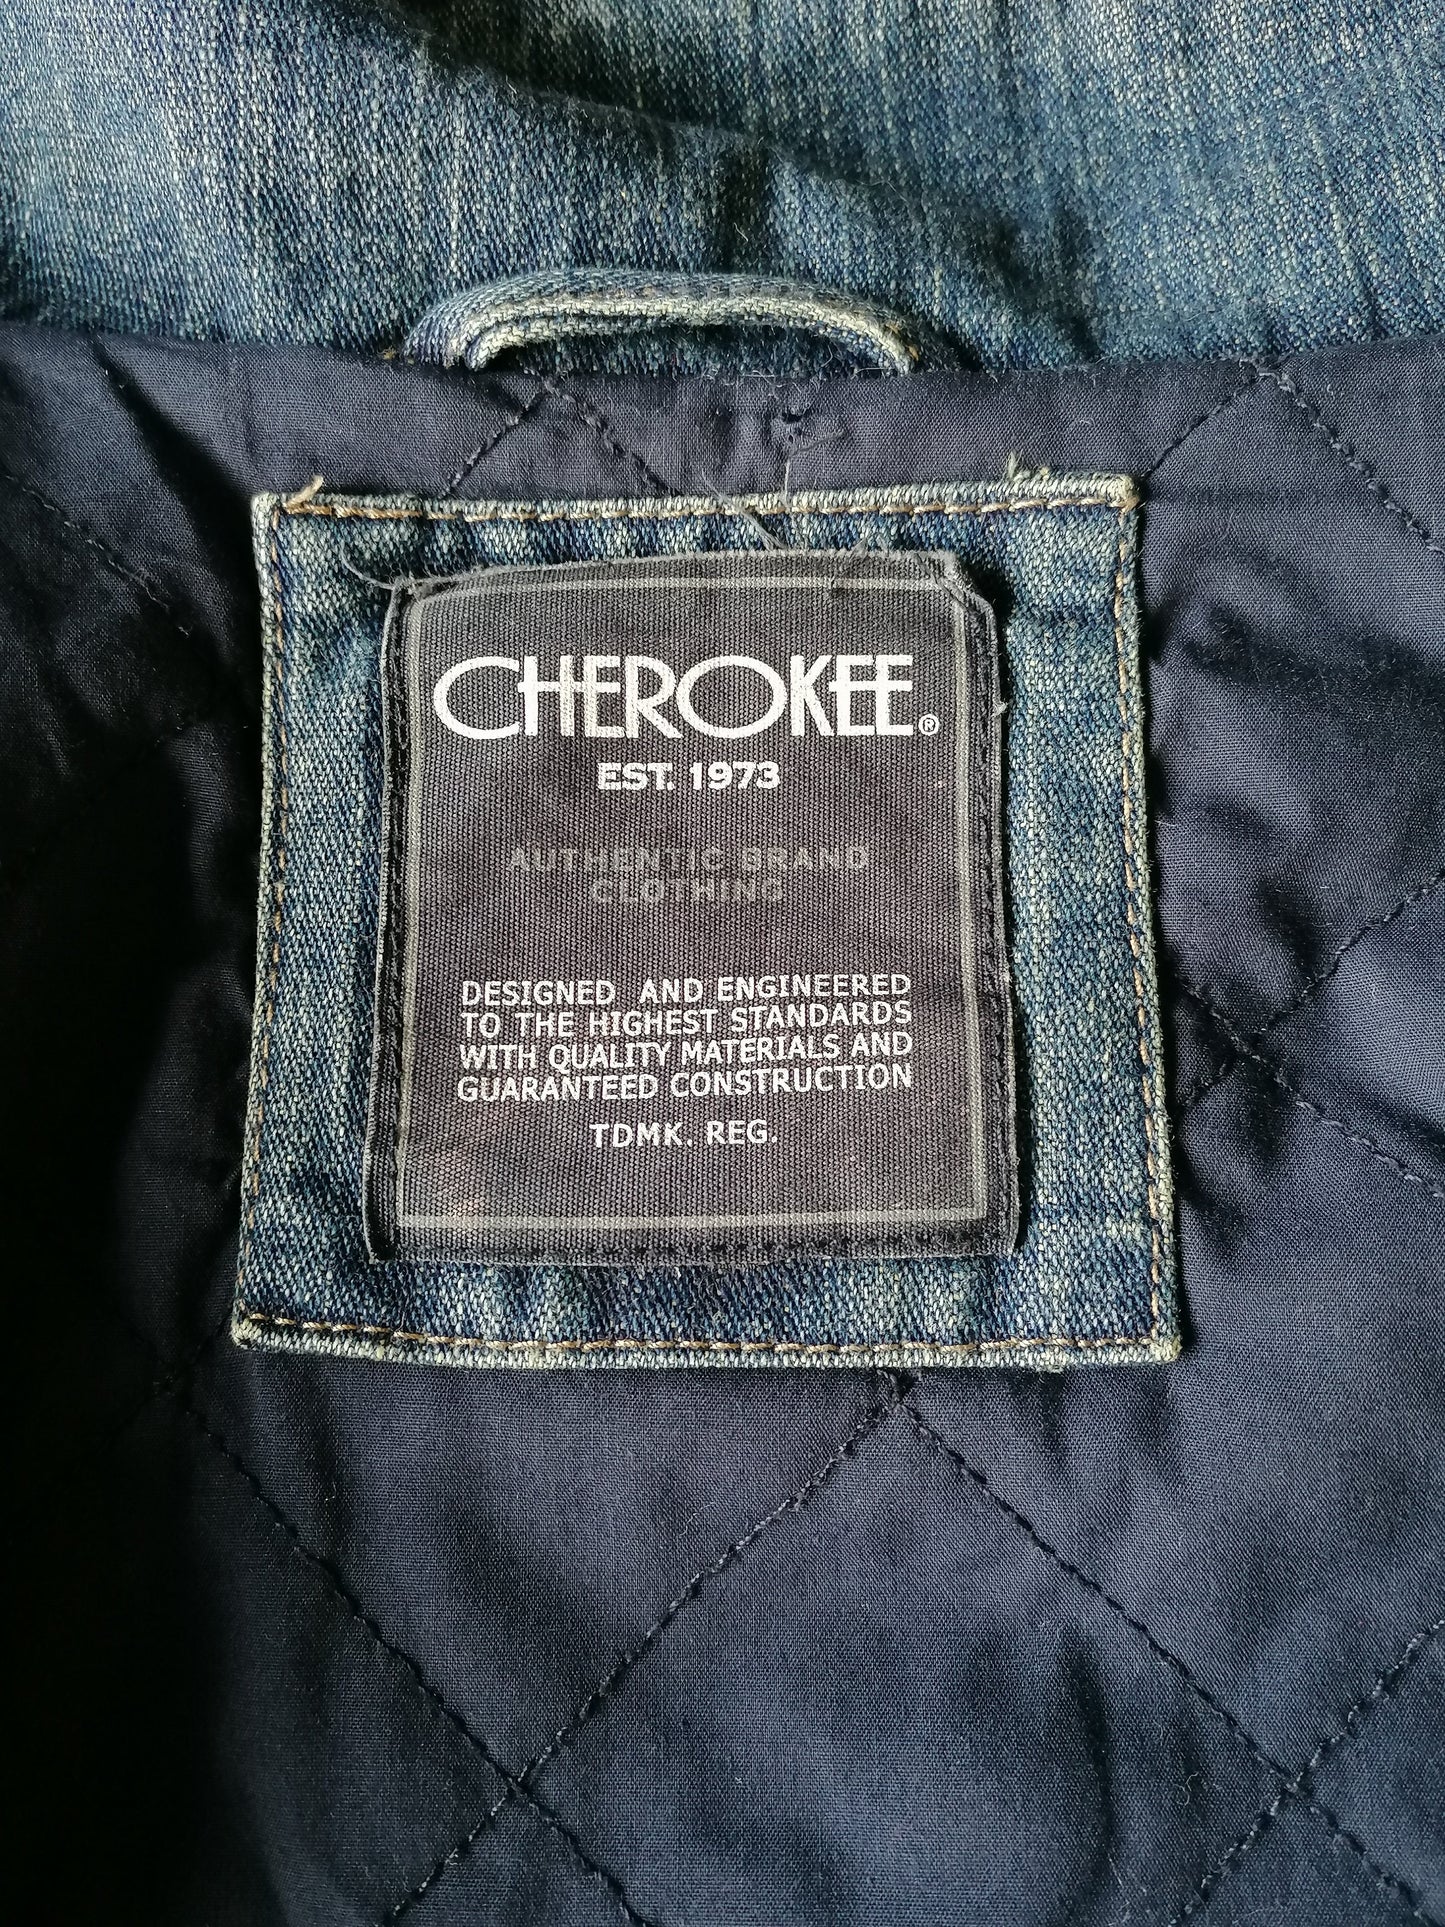 Vintage Cherokee denim jacket. Lightly lined. Colored blue. Size S.